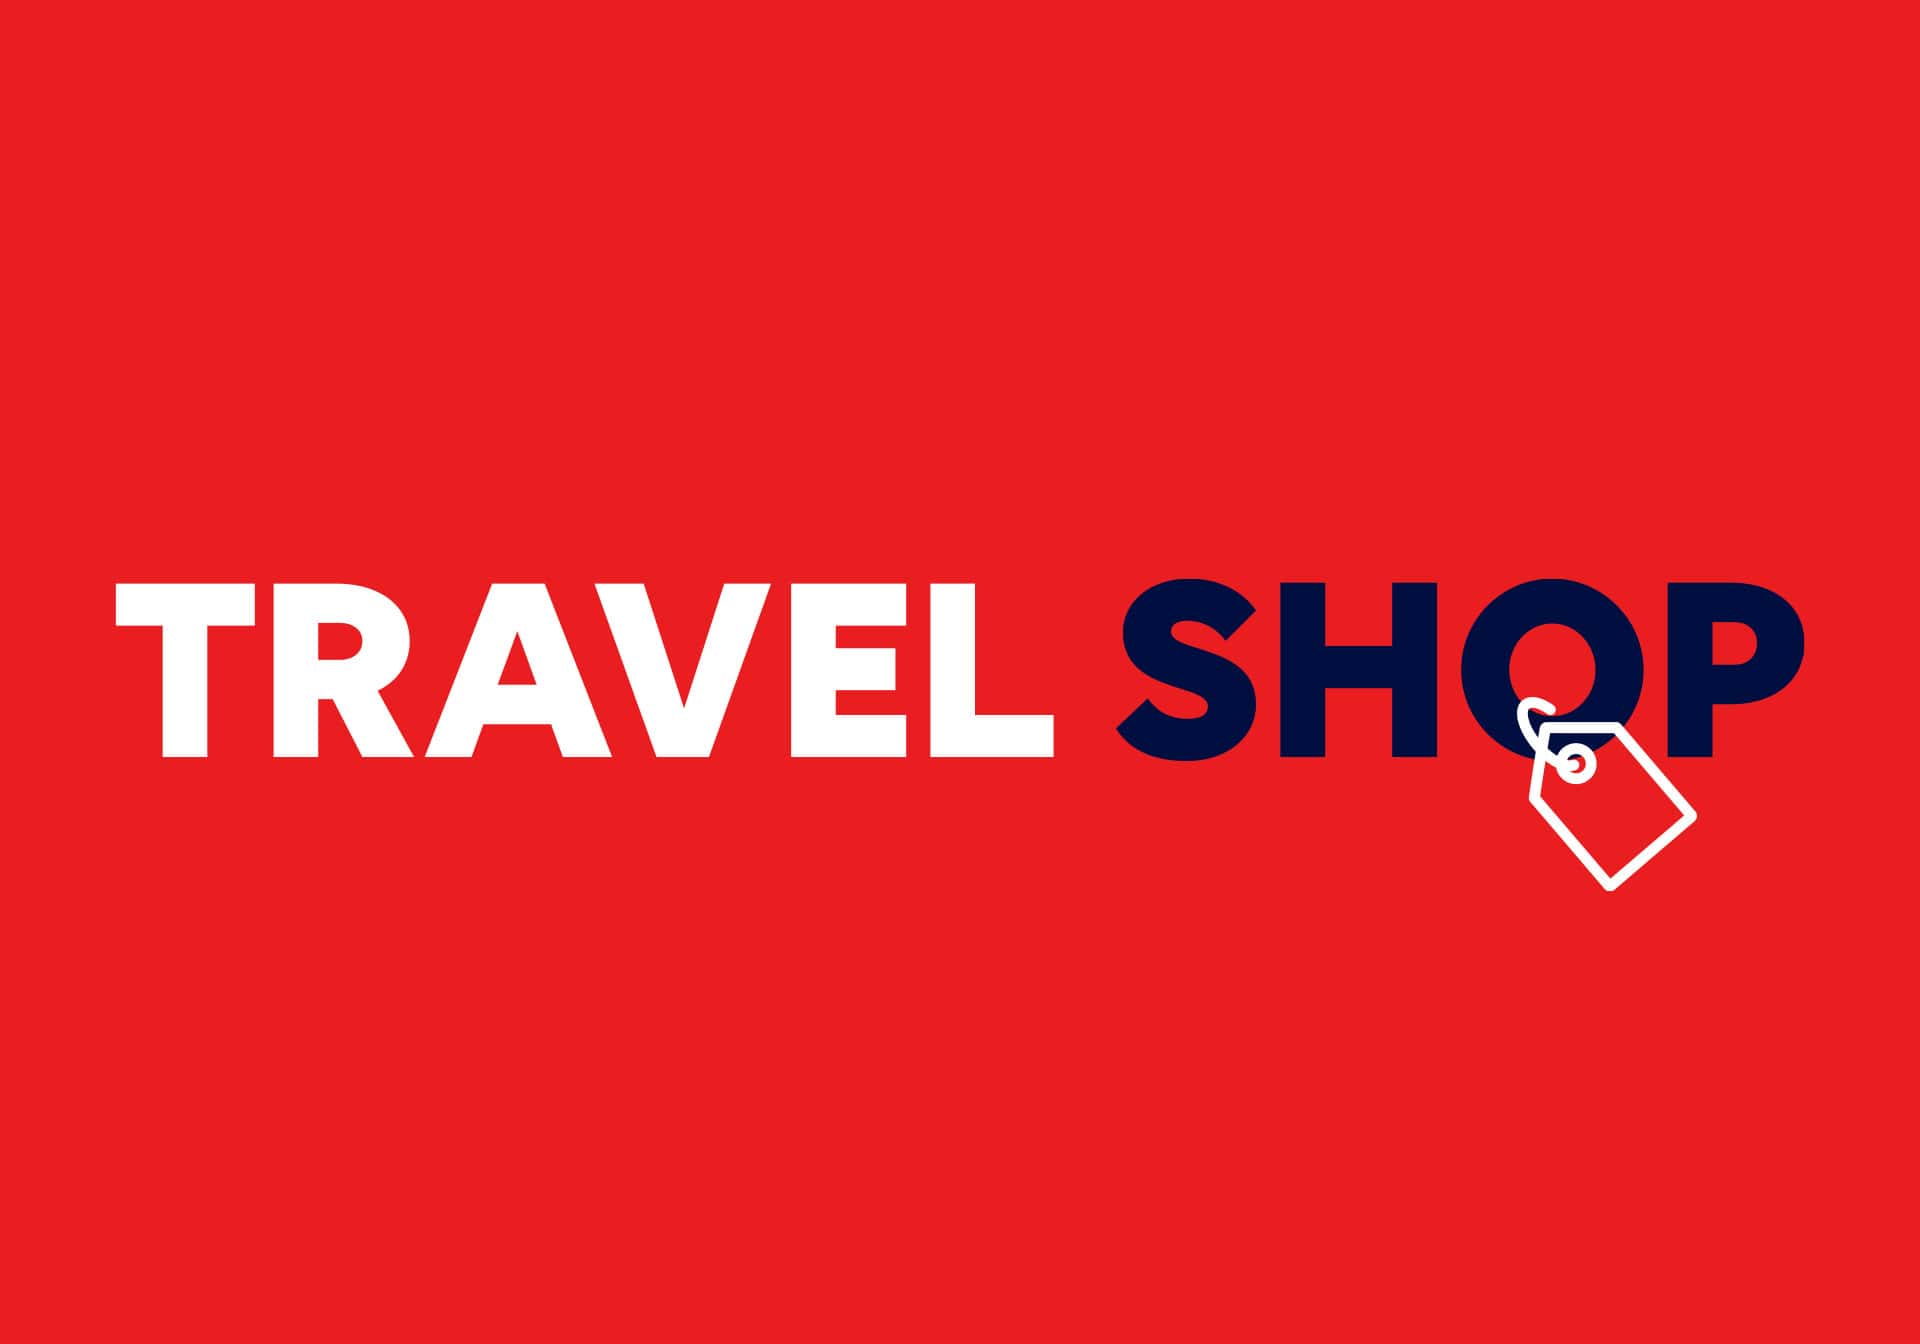 Travel Shop logo